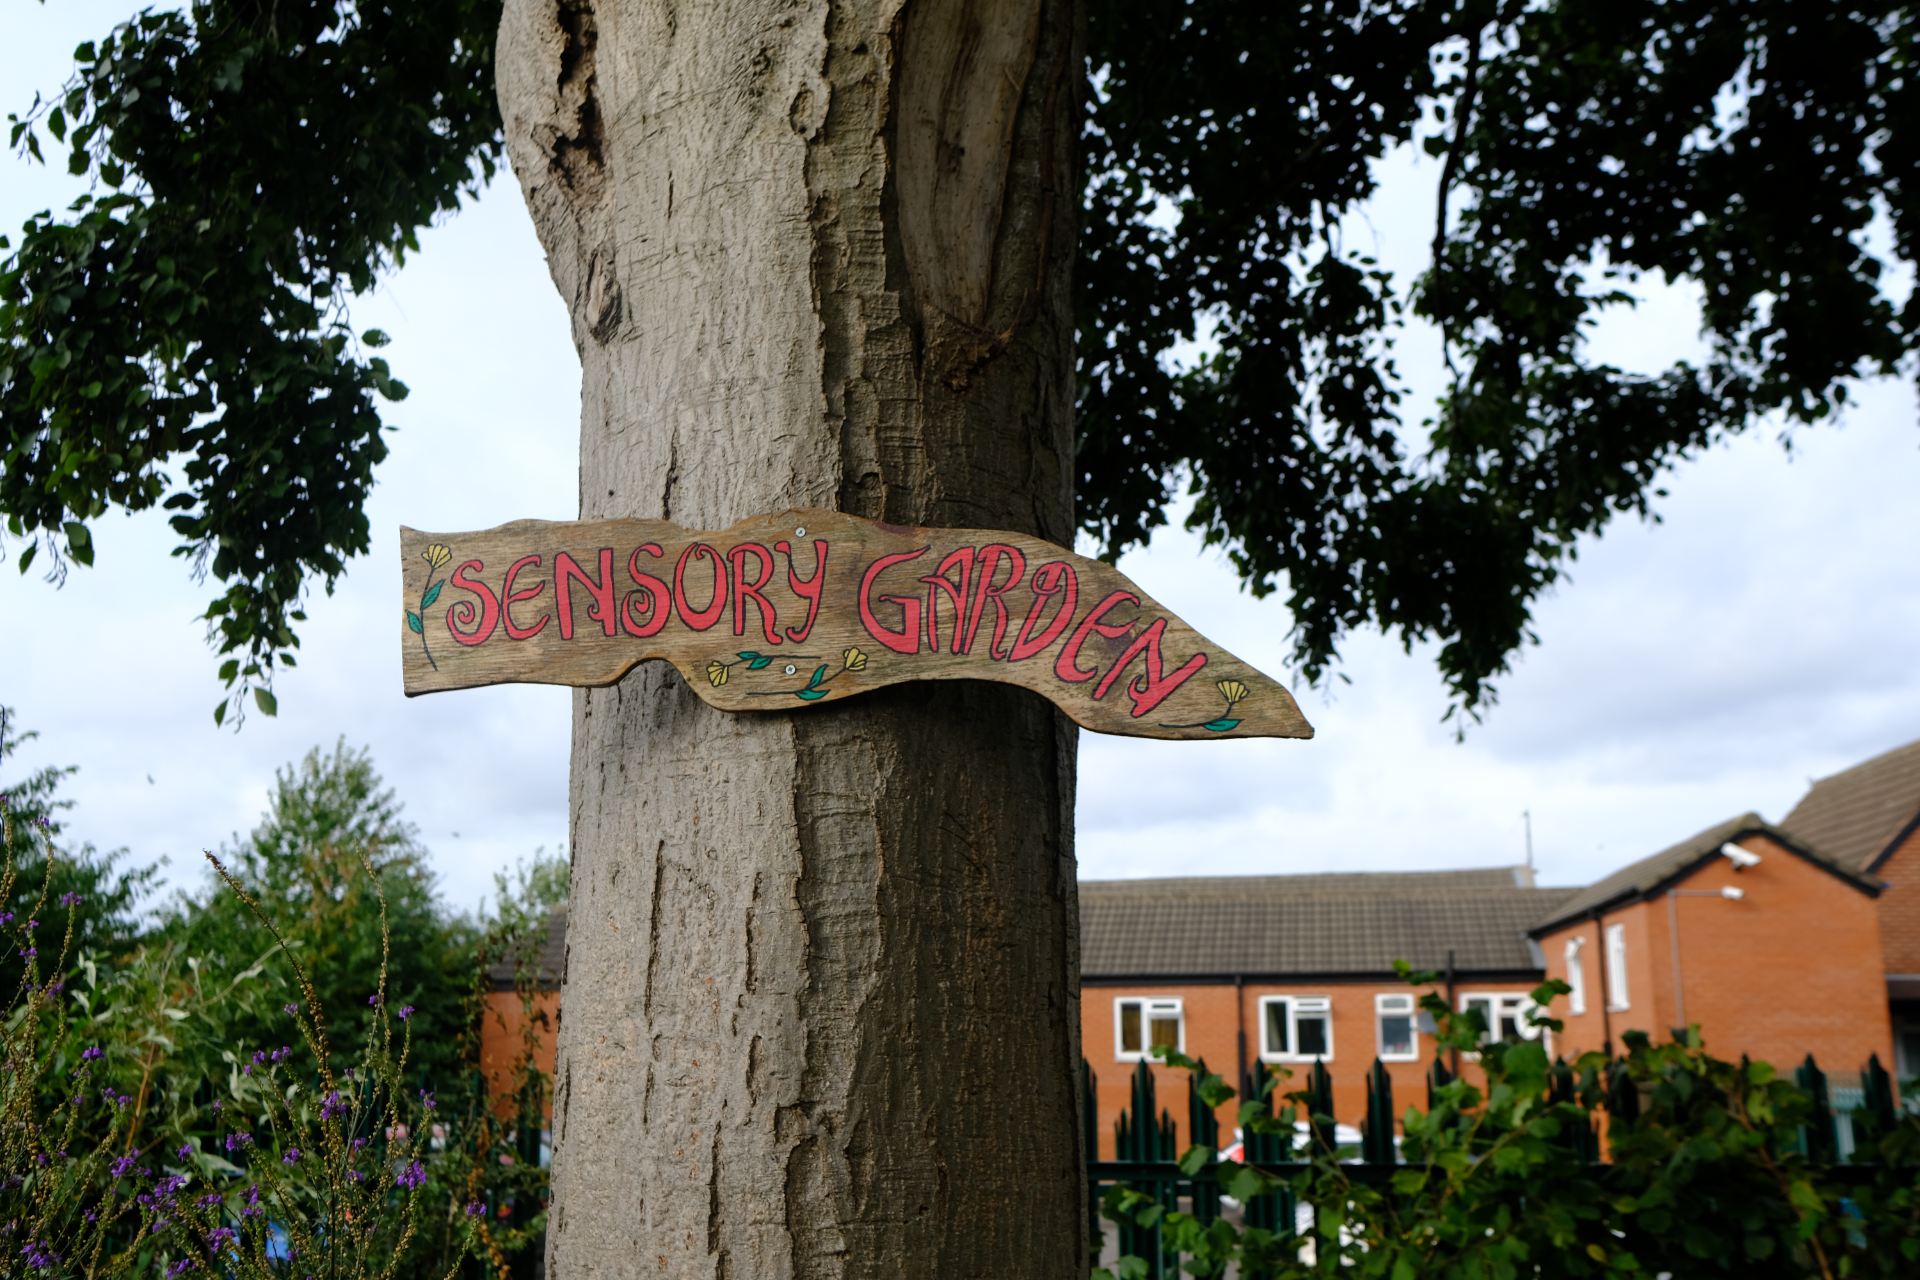 Wooden handpainted sign on tree saying 'Sensory Garden'